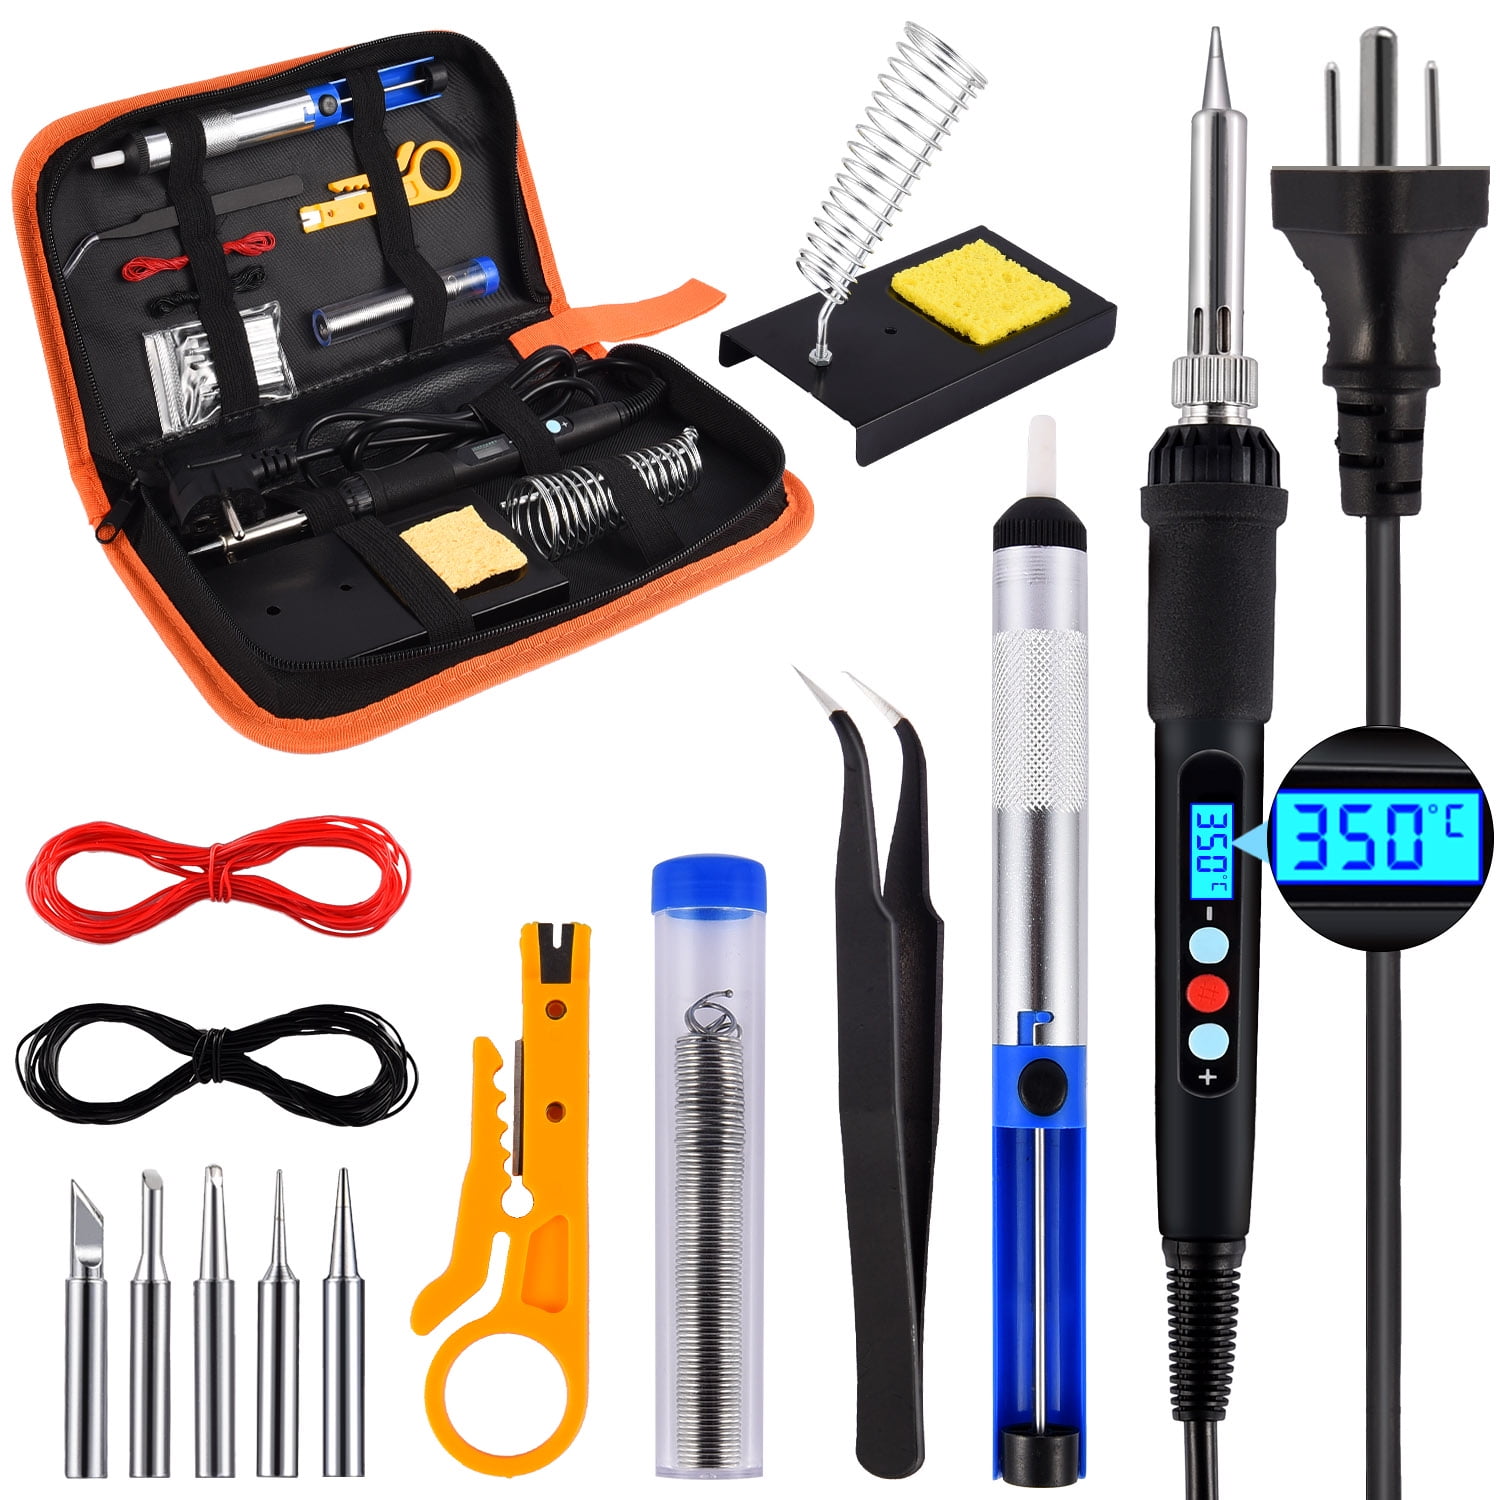 Electronic design soldering iron DIY project kit solder full set 60W sucker tool 